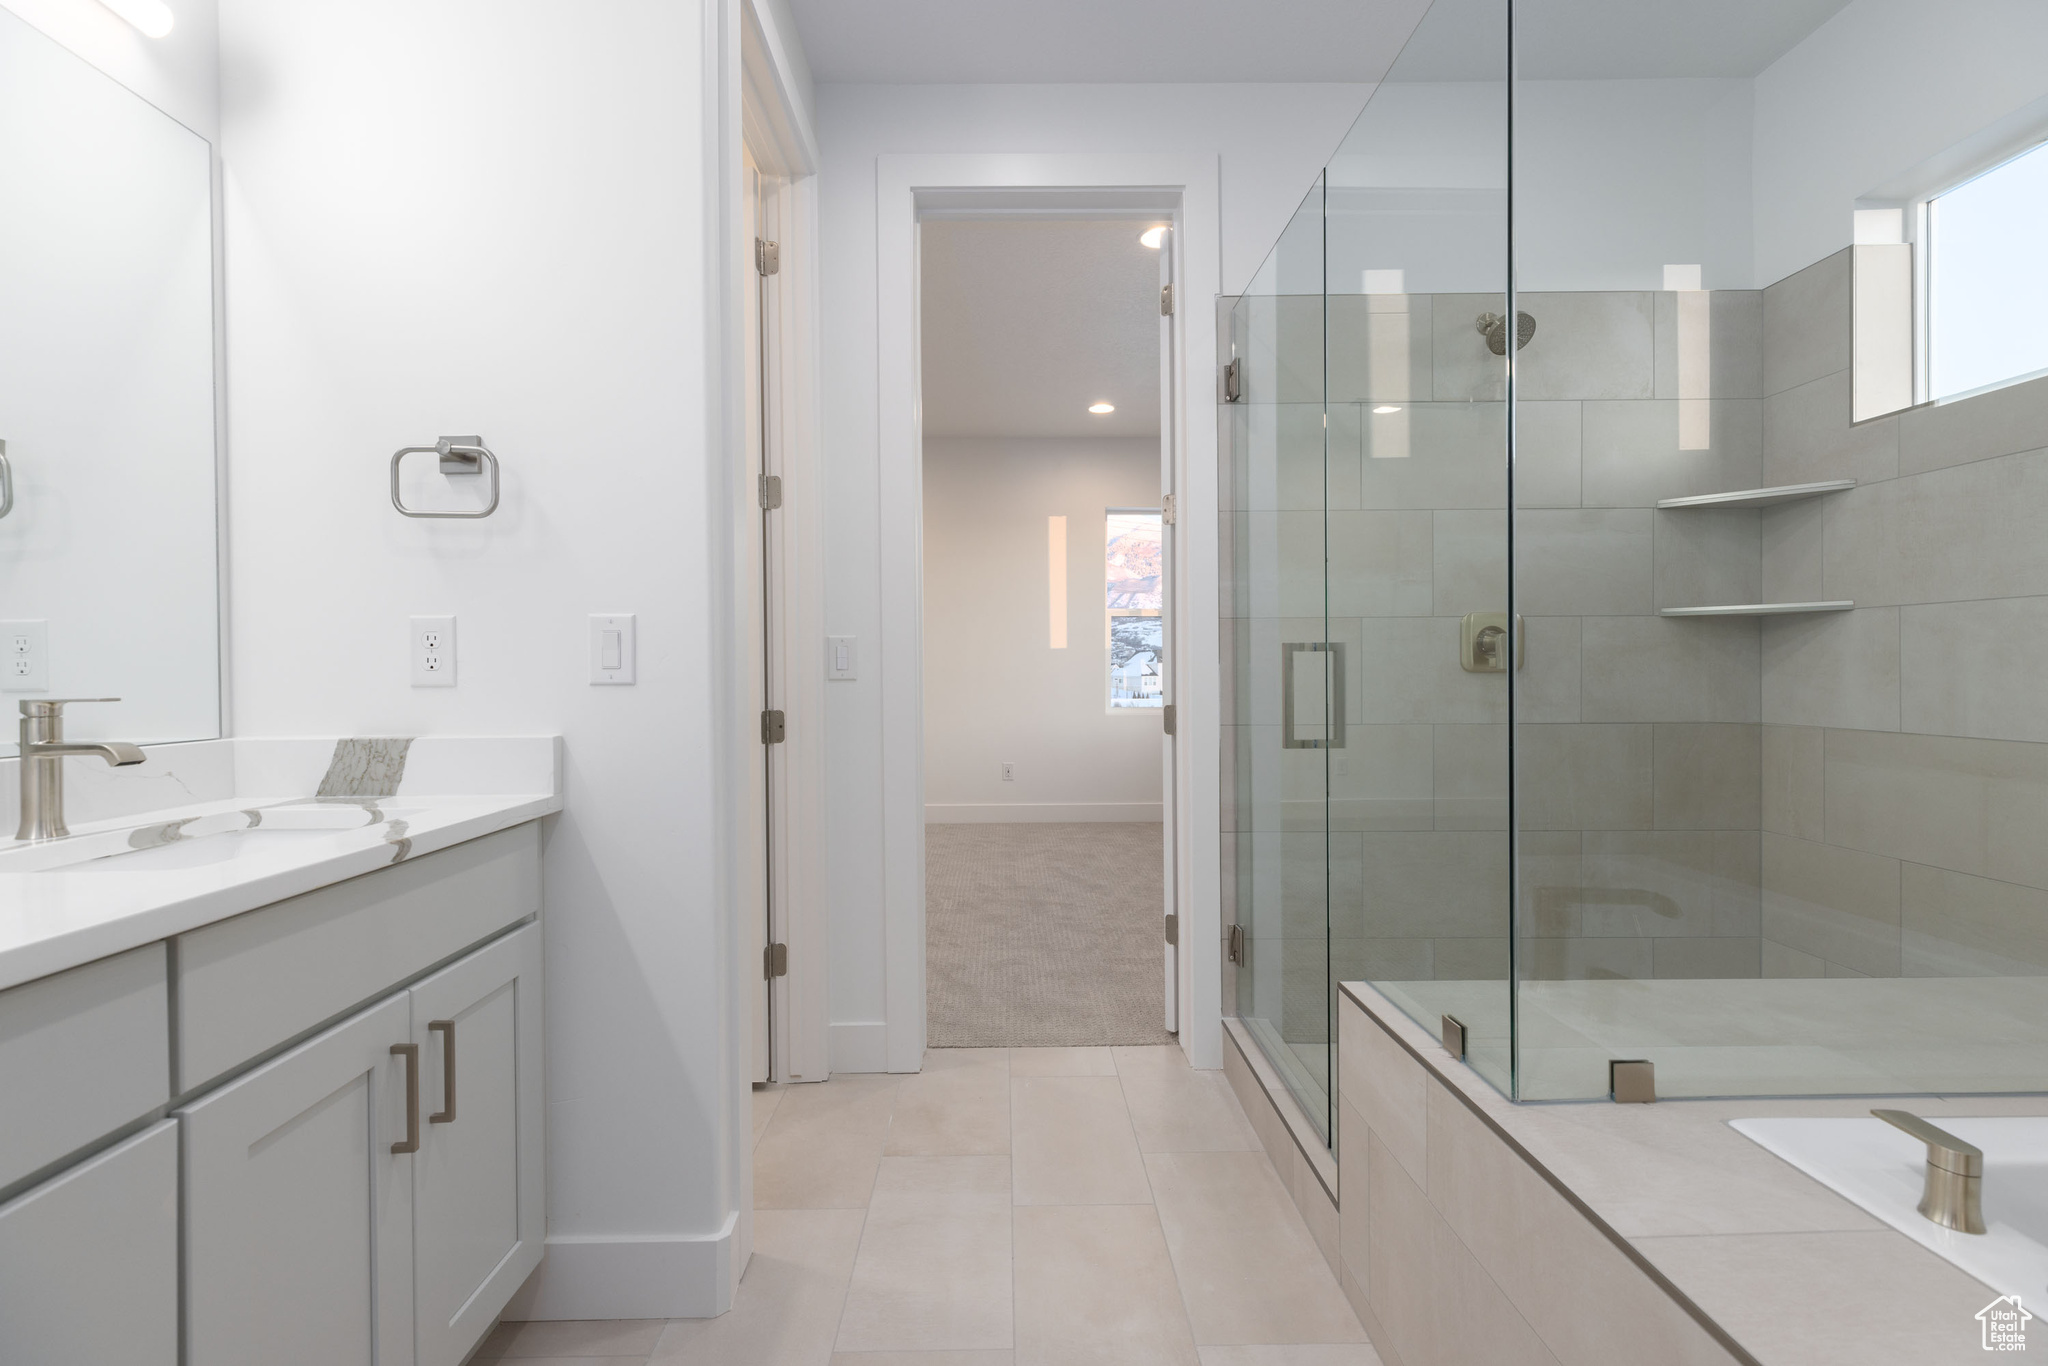 Bathroom featuring walk in shower, large vanity, and tile floors